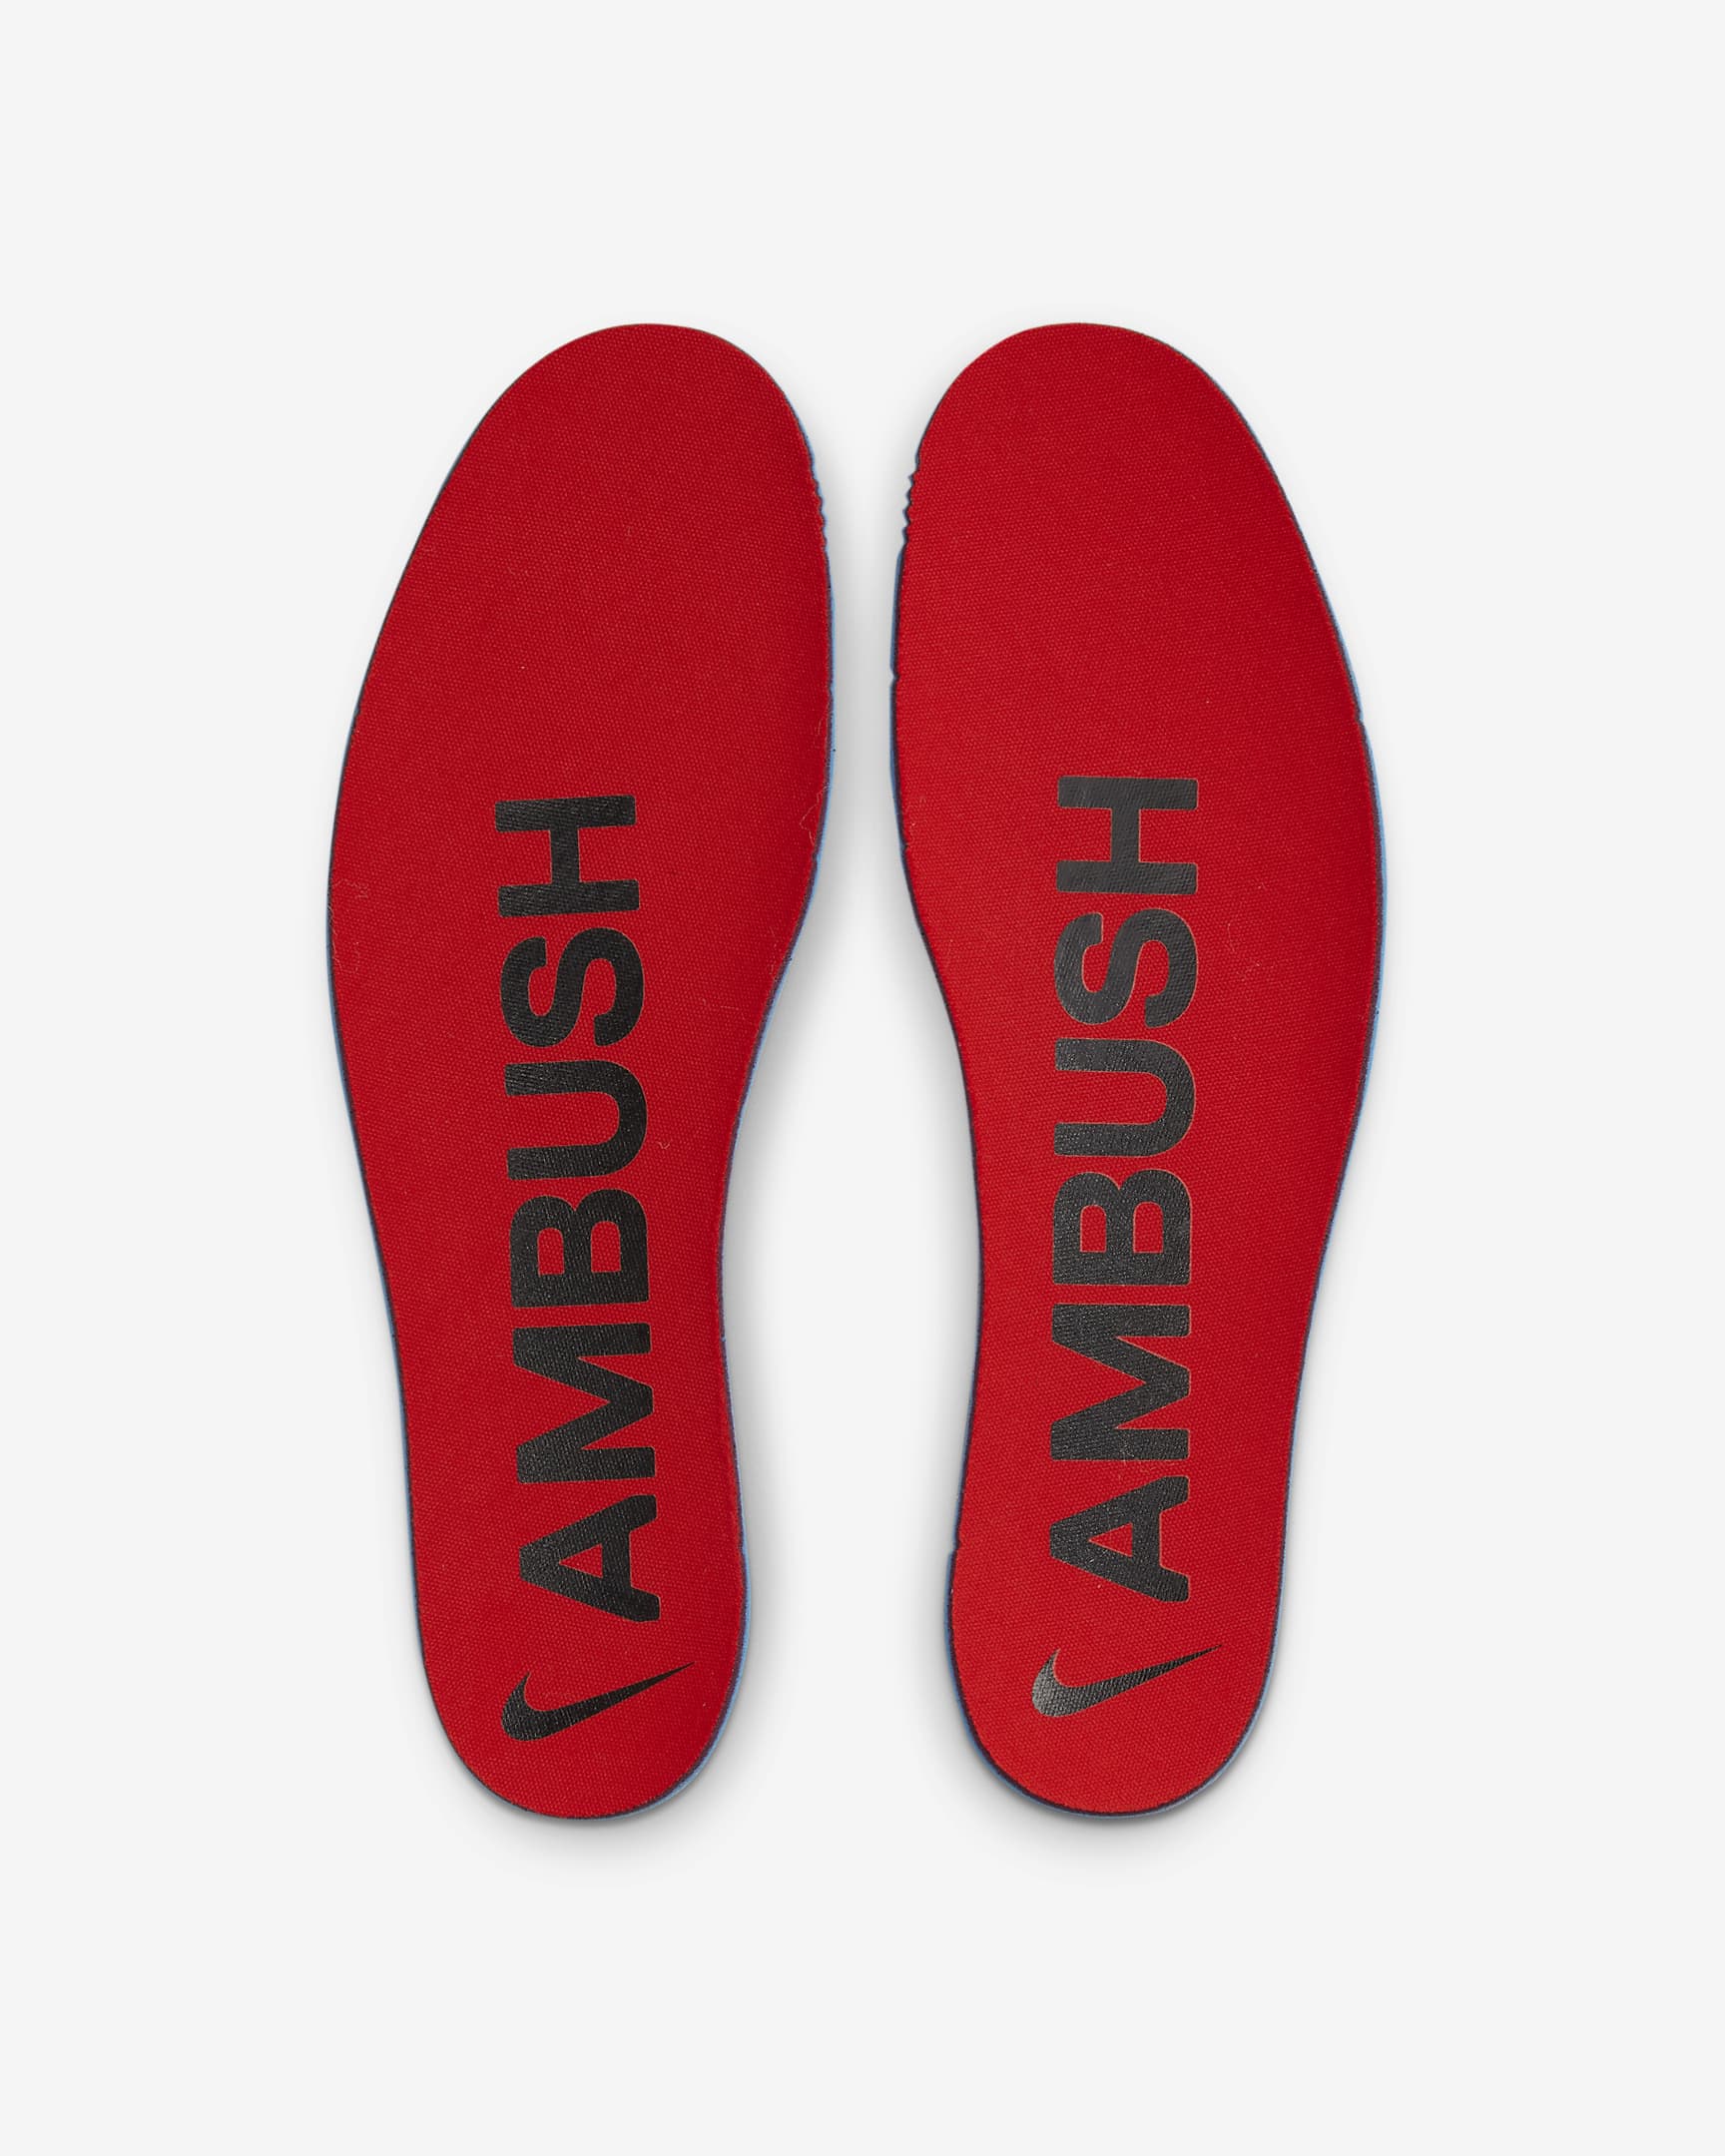 Nike x Ambush Air Adjust Force Men's Shoes - University Blue/Black/Habanero Red/Black